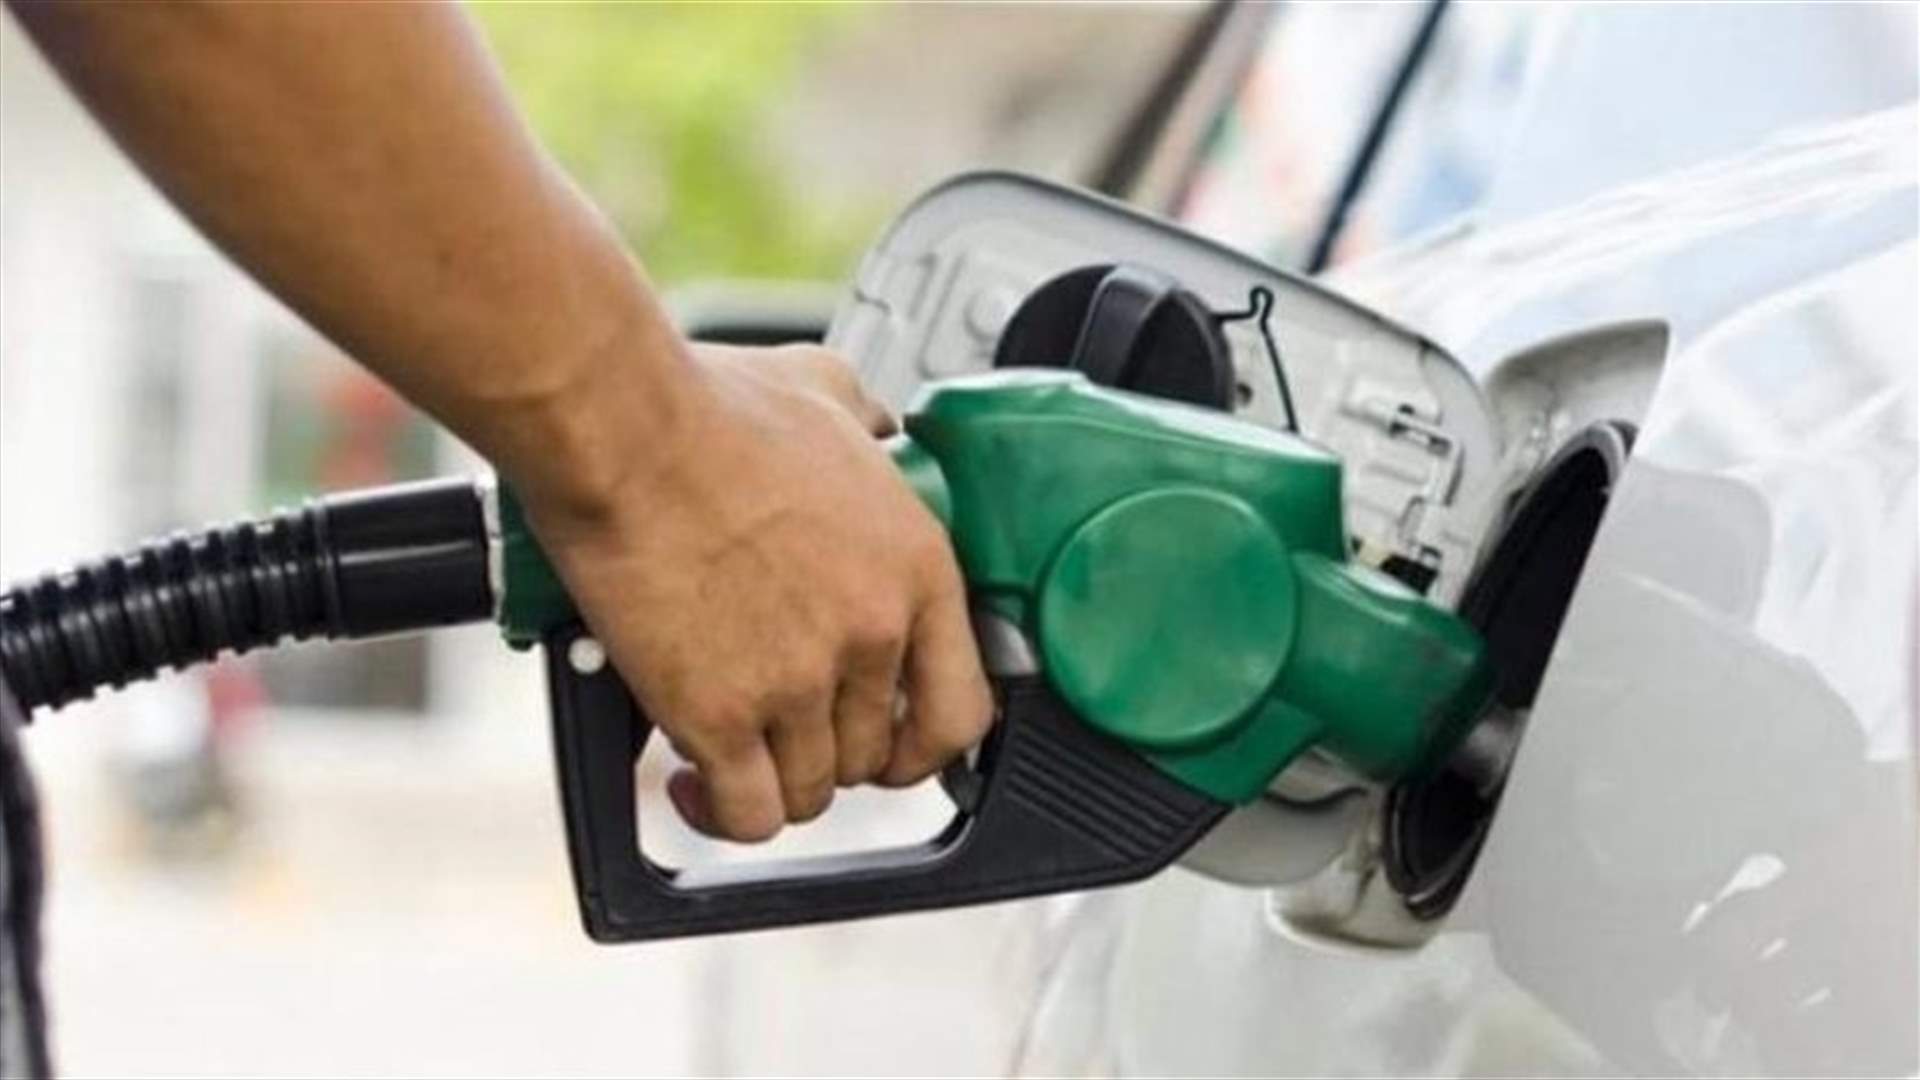 Fuel prices increase across Lebanon